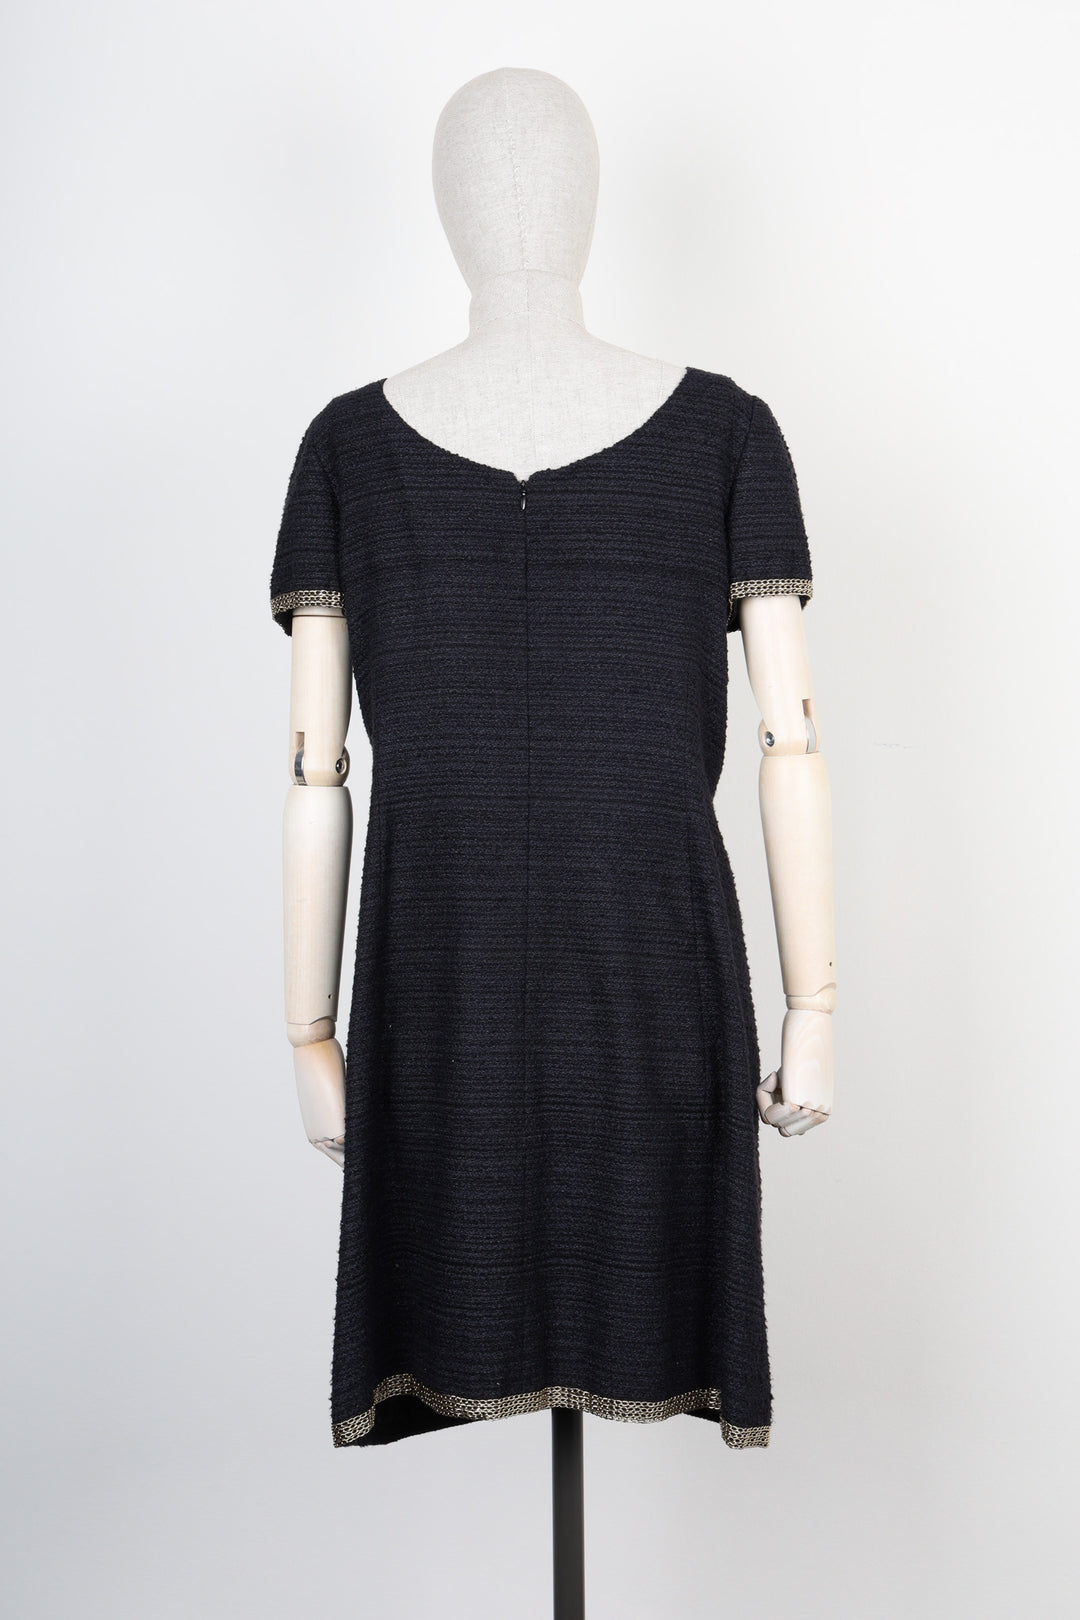 CHANEL Chain Dress Simple Tweed Black 2008